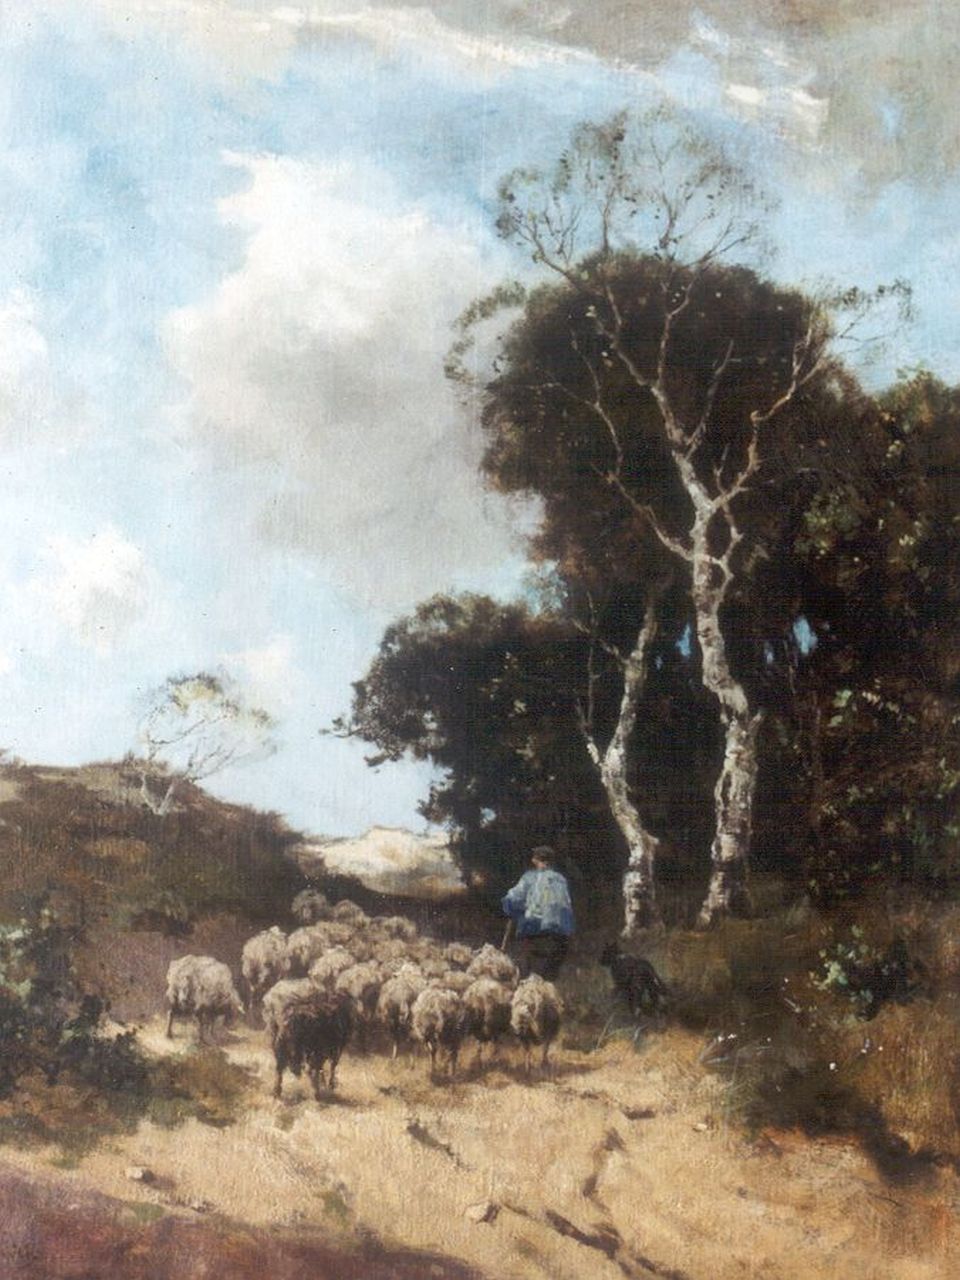 Scherrewitz J.F.C.  | Johan Frederik Cornelis Scherrewitz, Shepherd hearding his sheep on the heath, oil on canvas 65.5 x 50.8 cm, signed l.l.